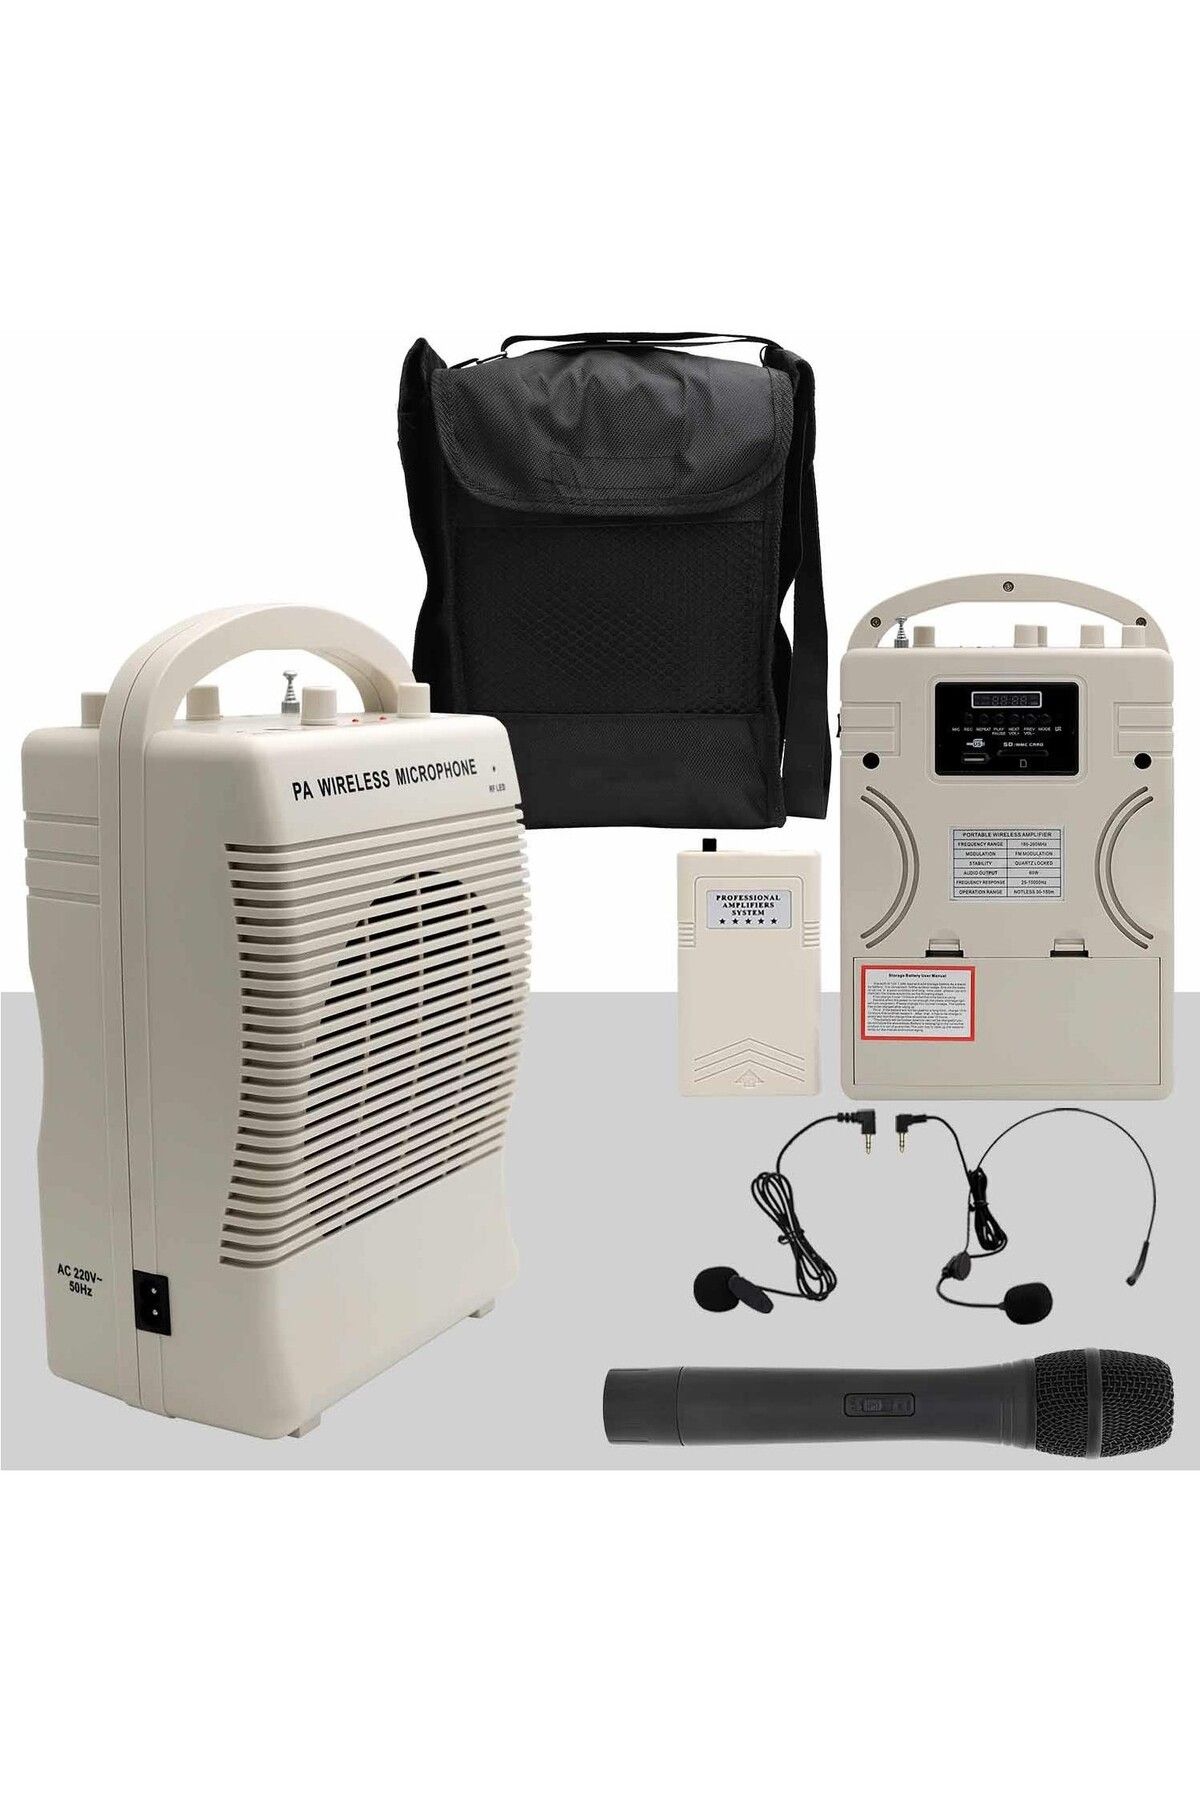 sommeow Midex 100 Watt Taşınabilir Şarjlı Portatif Ses Sistemi Hoparlör Çift Mikrofonlu Usb Mp3 (Mr-100Ey)